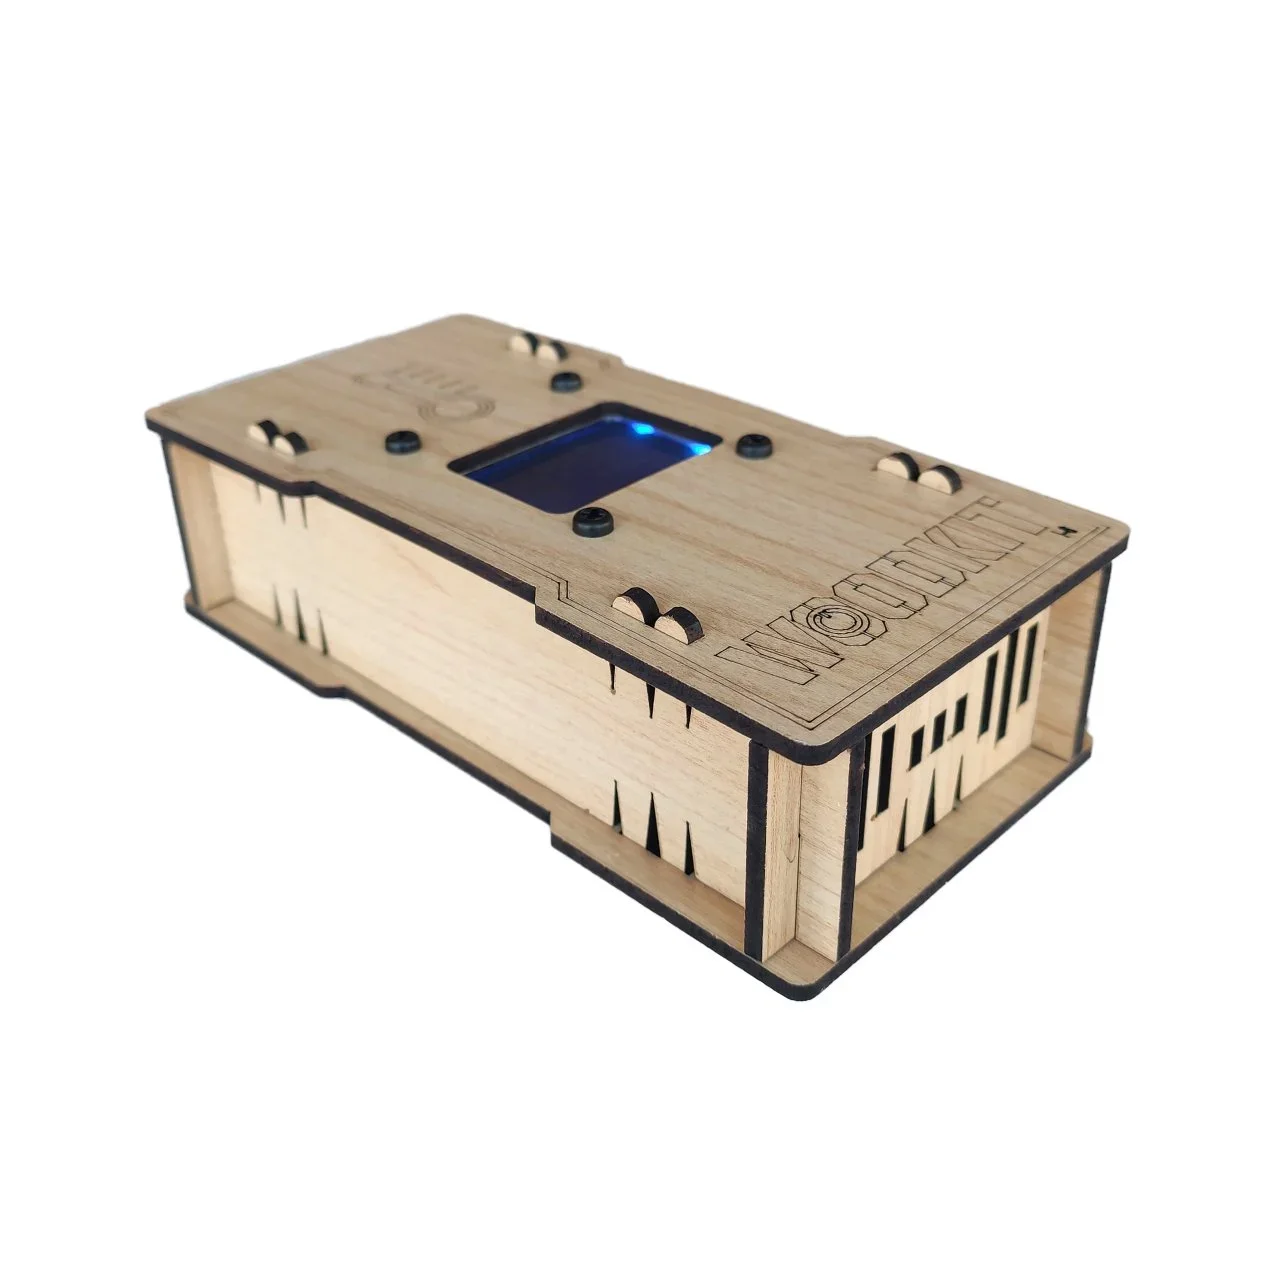 Wood-Kit Robotic Coding kit - Digital Thermometer